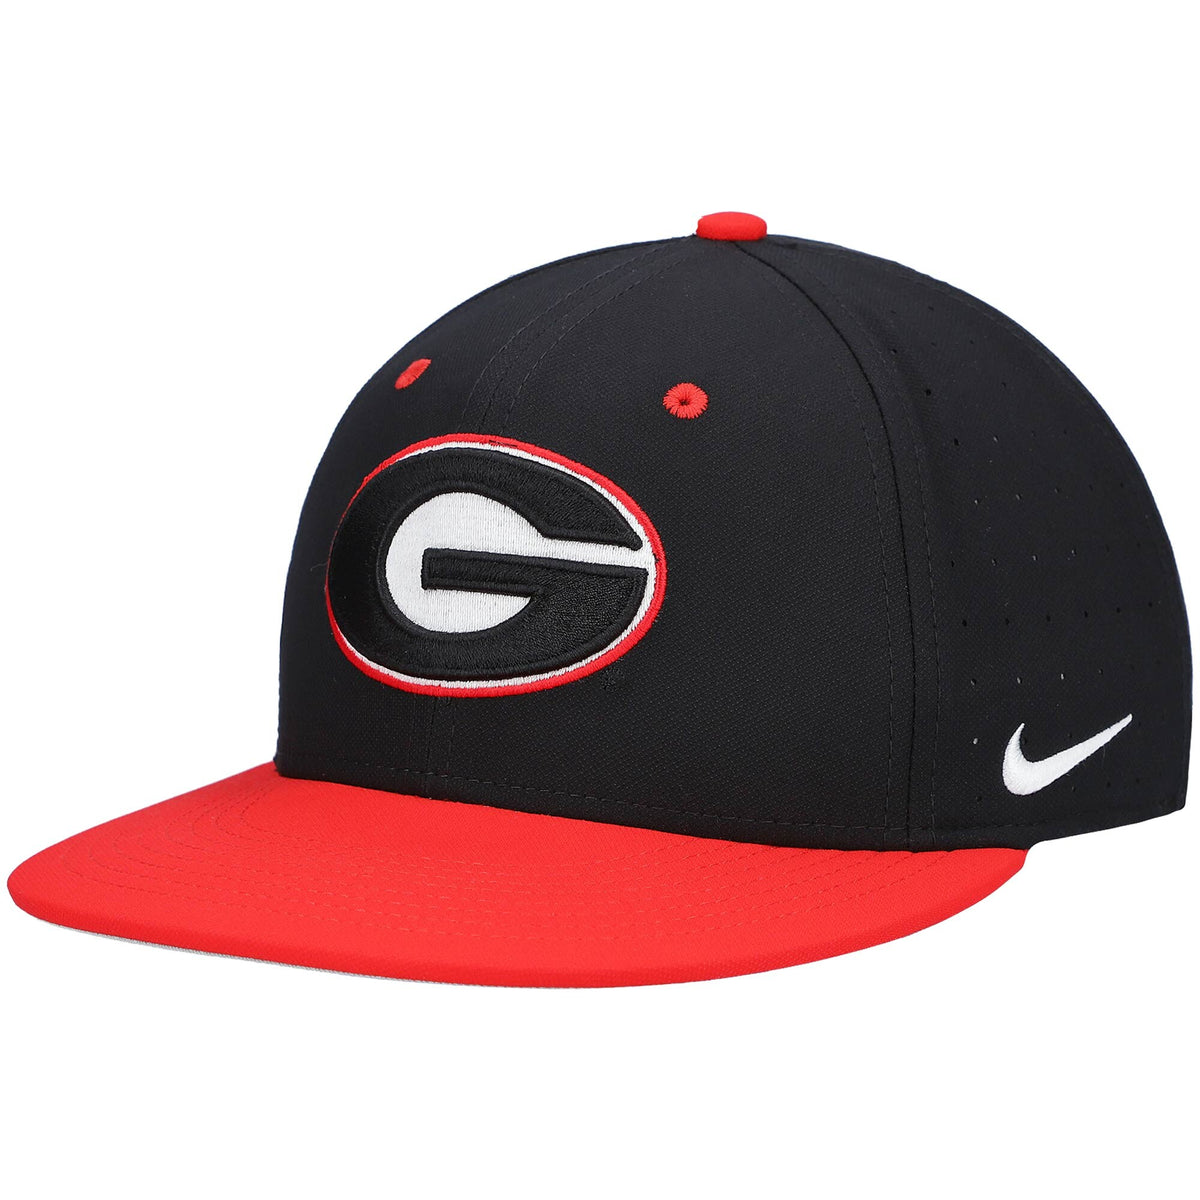 Nike Men's Georgia Bulldogs Black Fitted Baseball Hat, Size 7 1/2